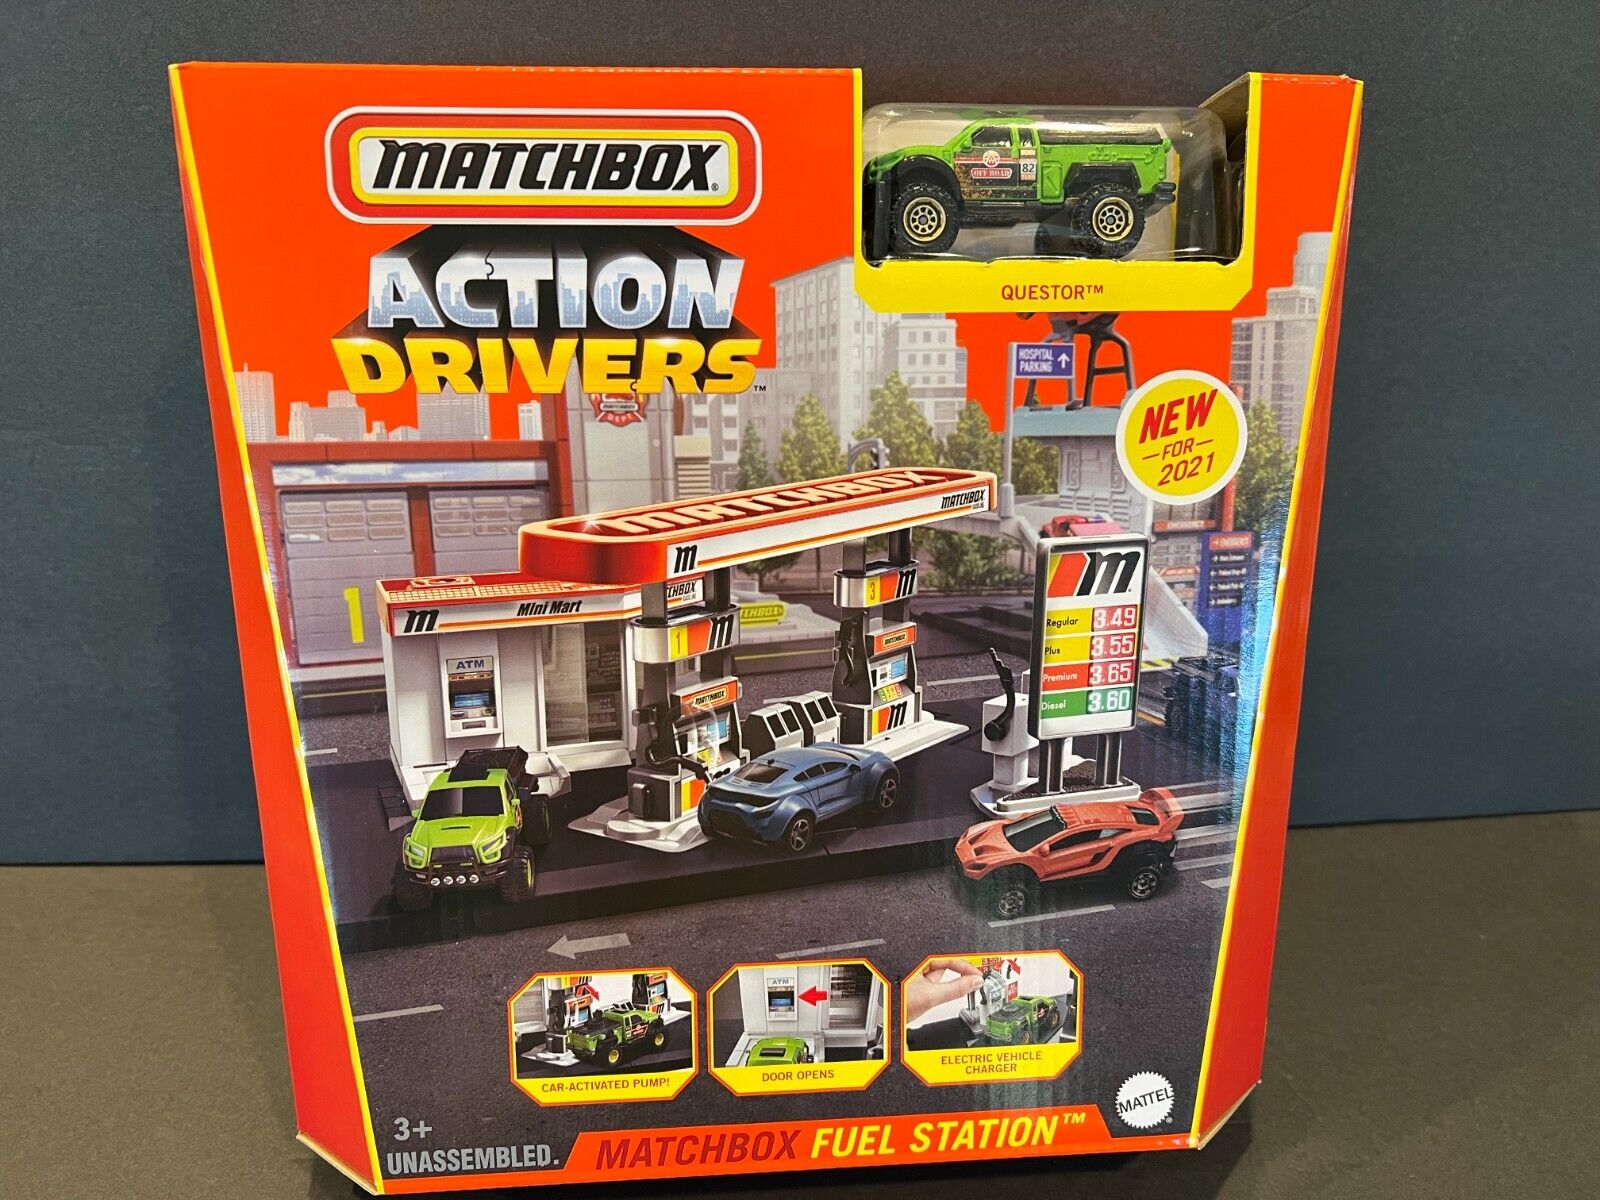 Mattel Matchbox Action Drivers Fuel Station Playset w/Questor OffRoad Truck NIB